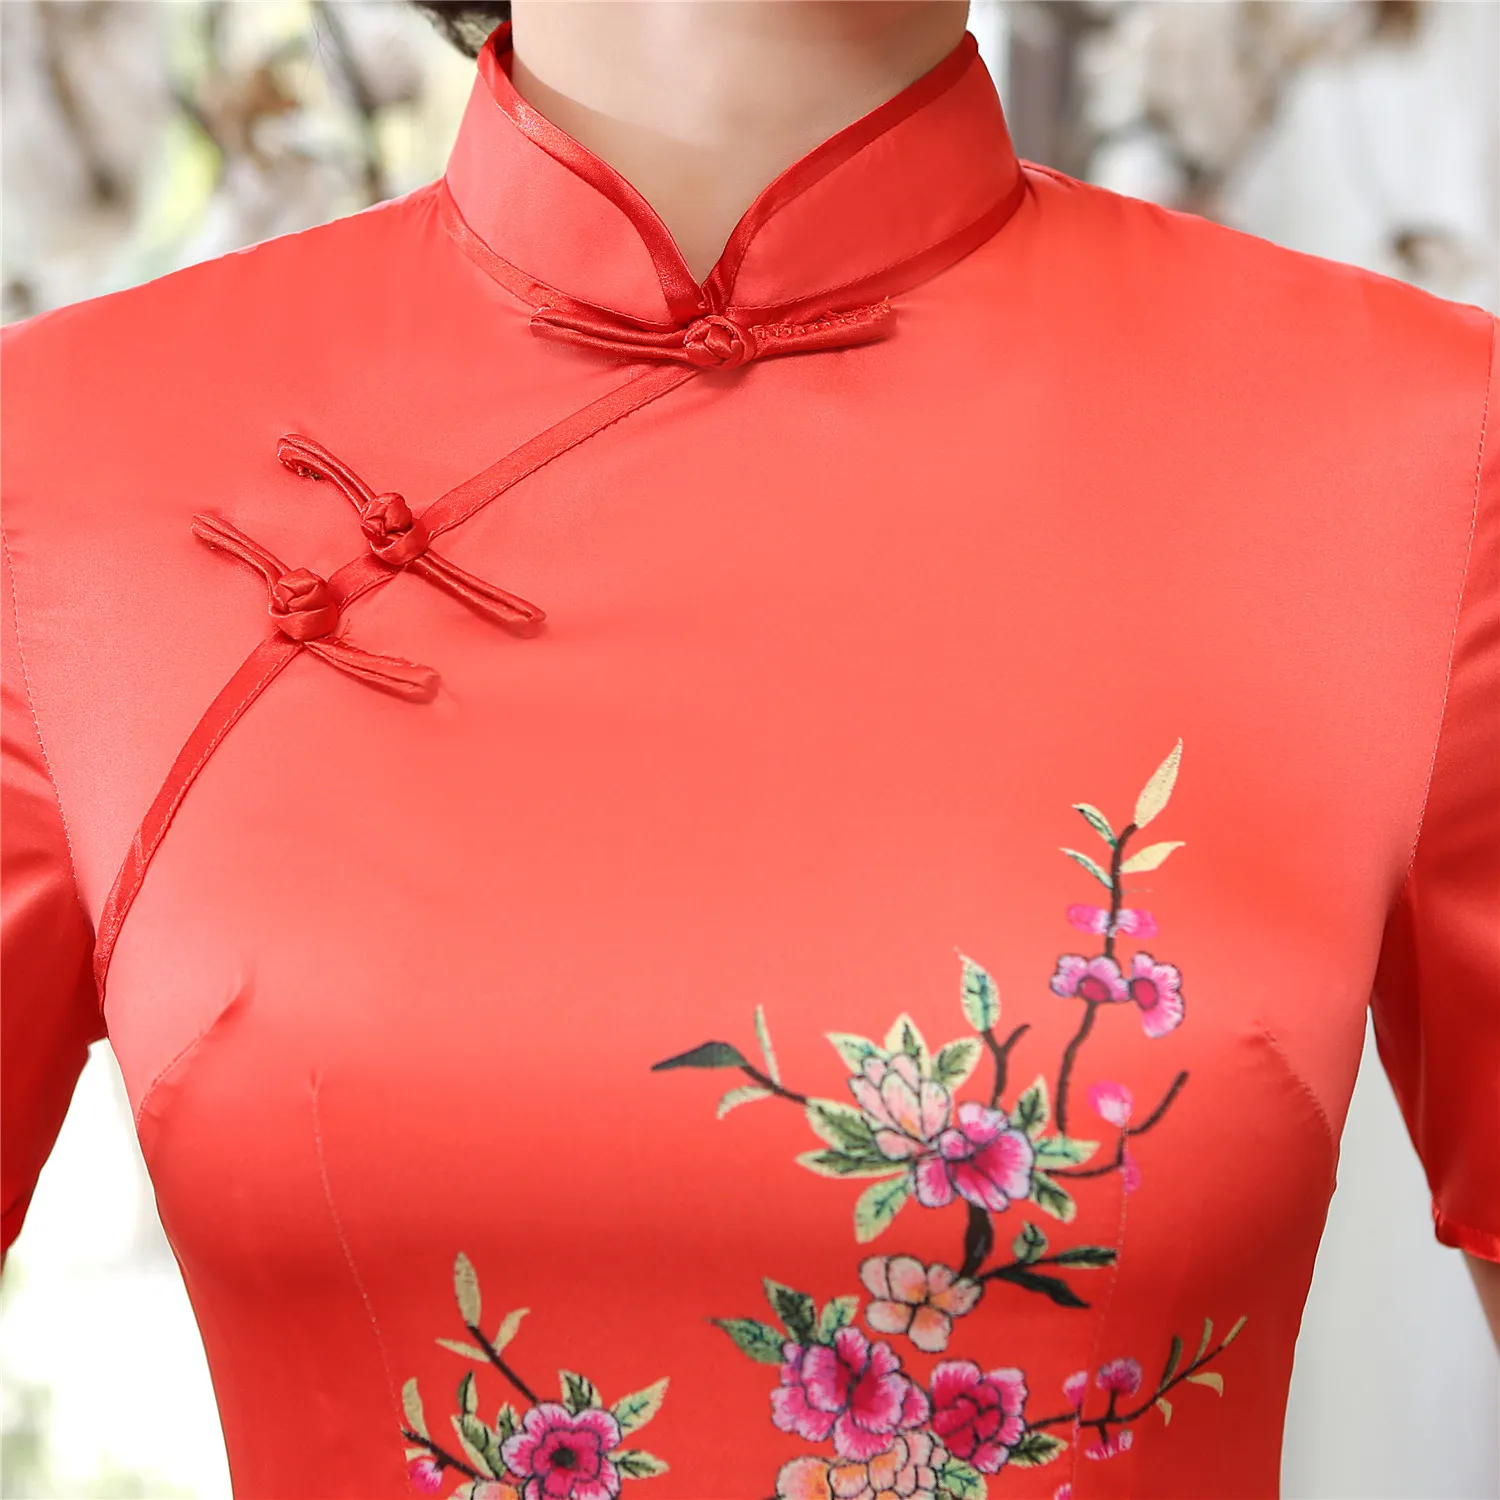 Shanghai Story Vietnam Aodai女性のための中国の伝統服